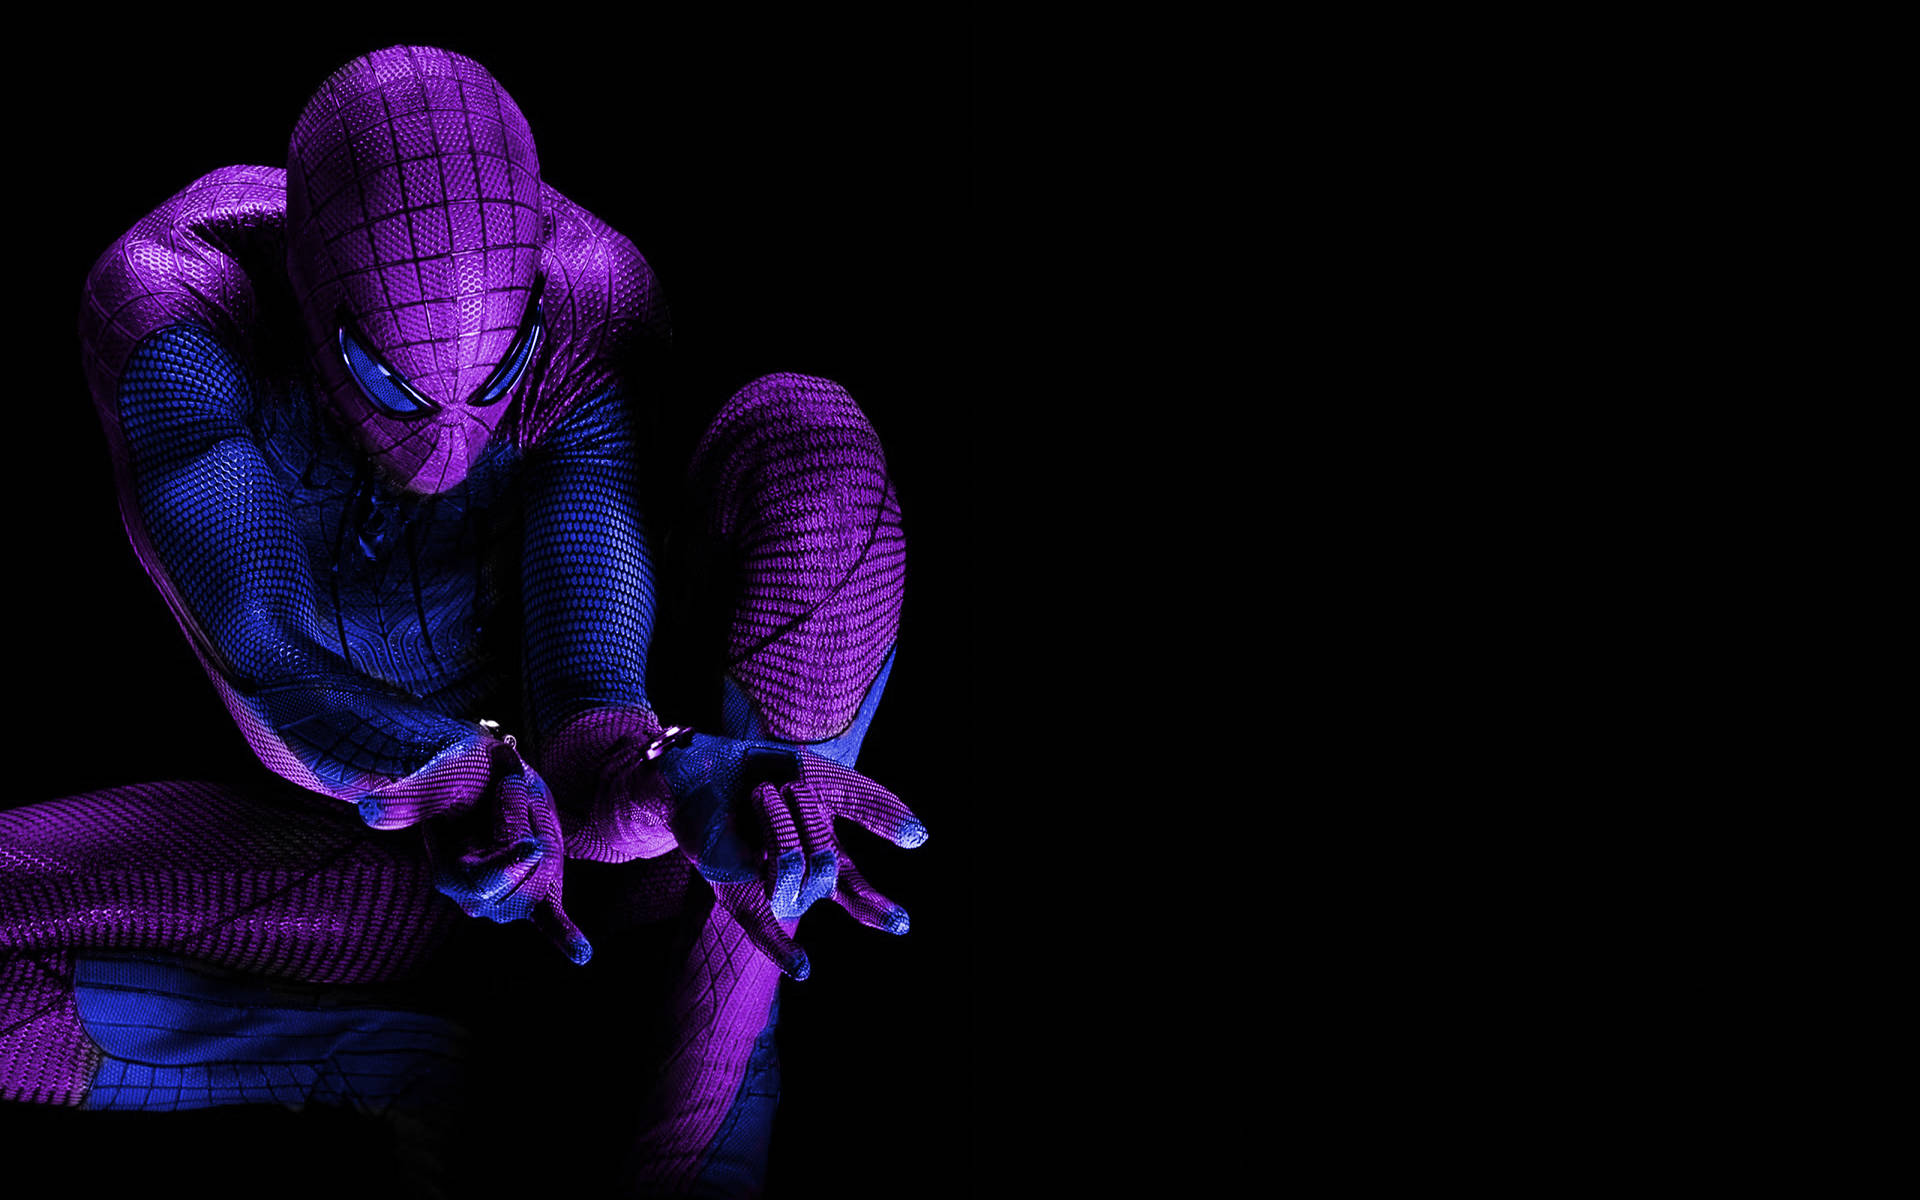 Spiderman Púrpura De Videojuego En Un Fondo De Escritorio Negro. Fondo de pantalla